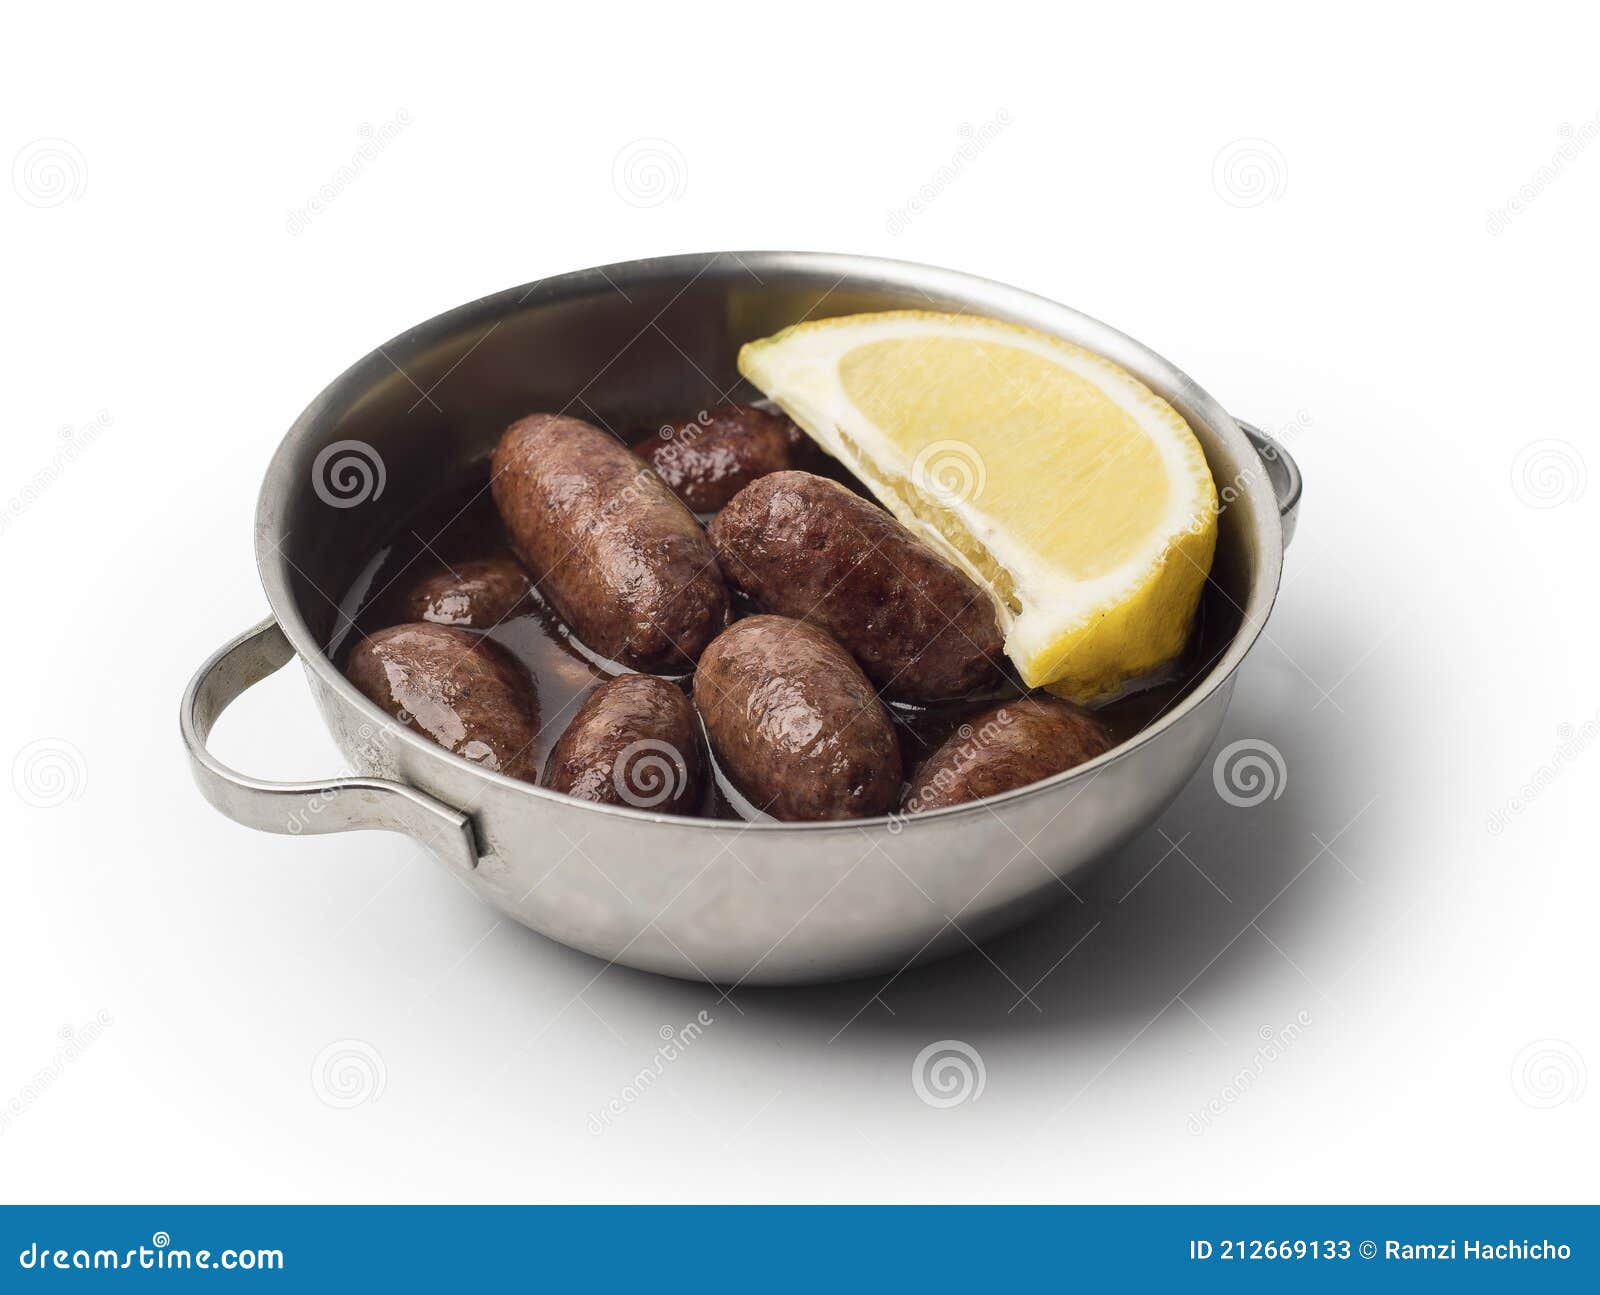 lebanese starters of makanek meat marinated, sausages fried in a metal pan